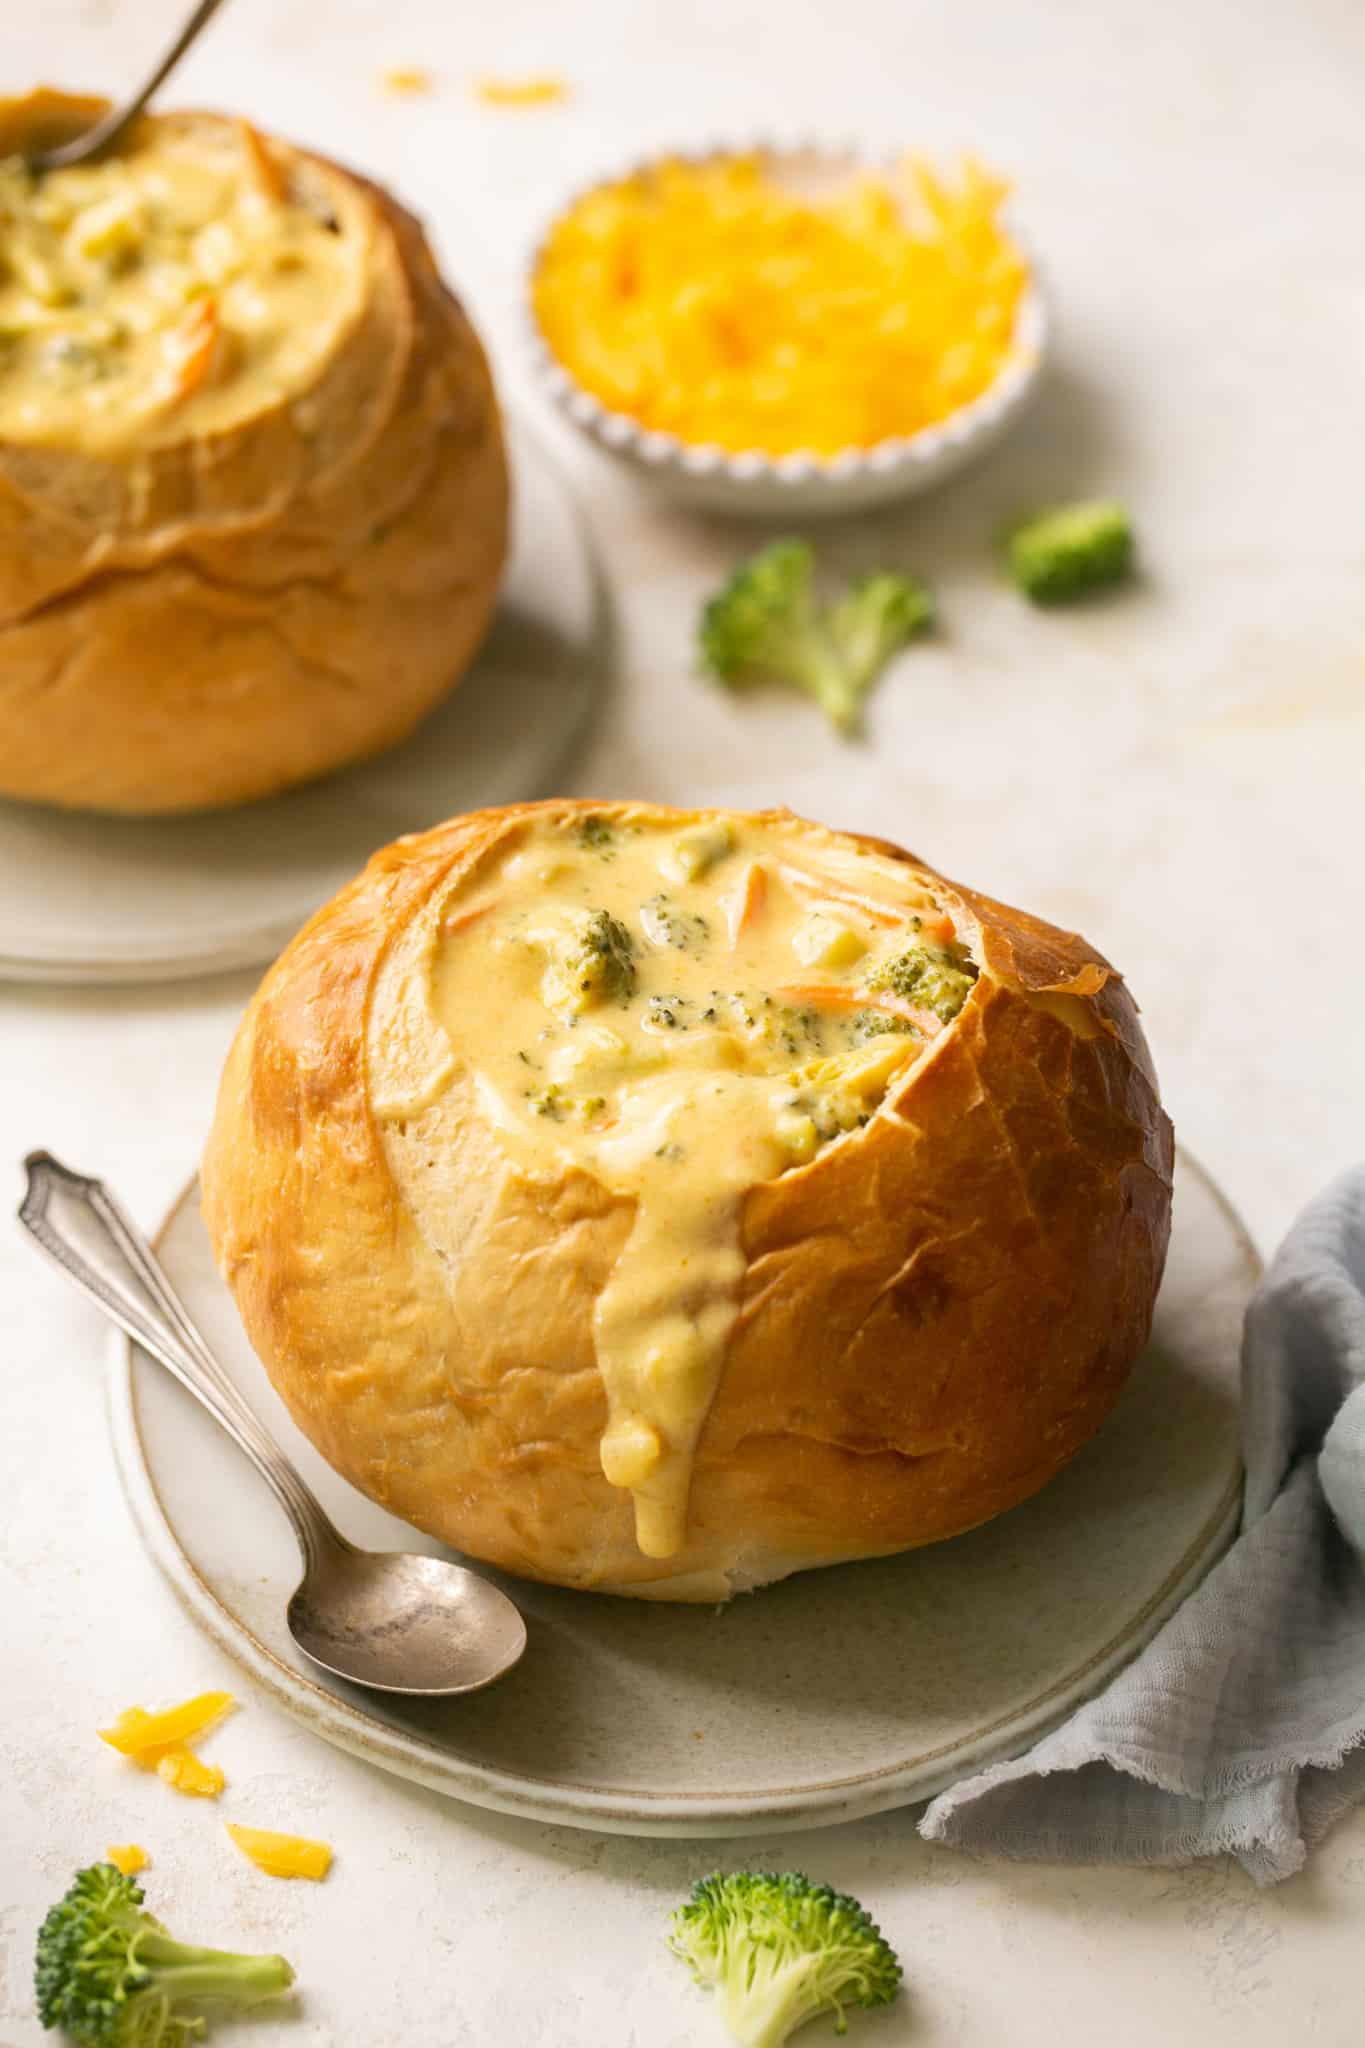 soup in a bread bowl. 